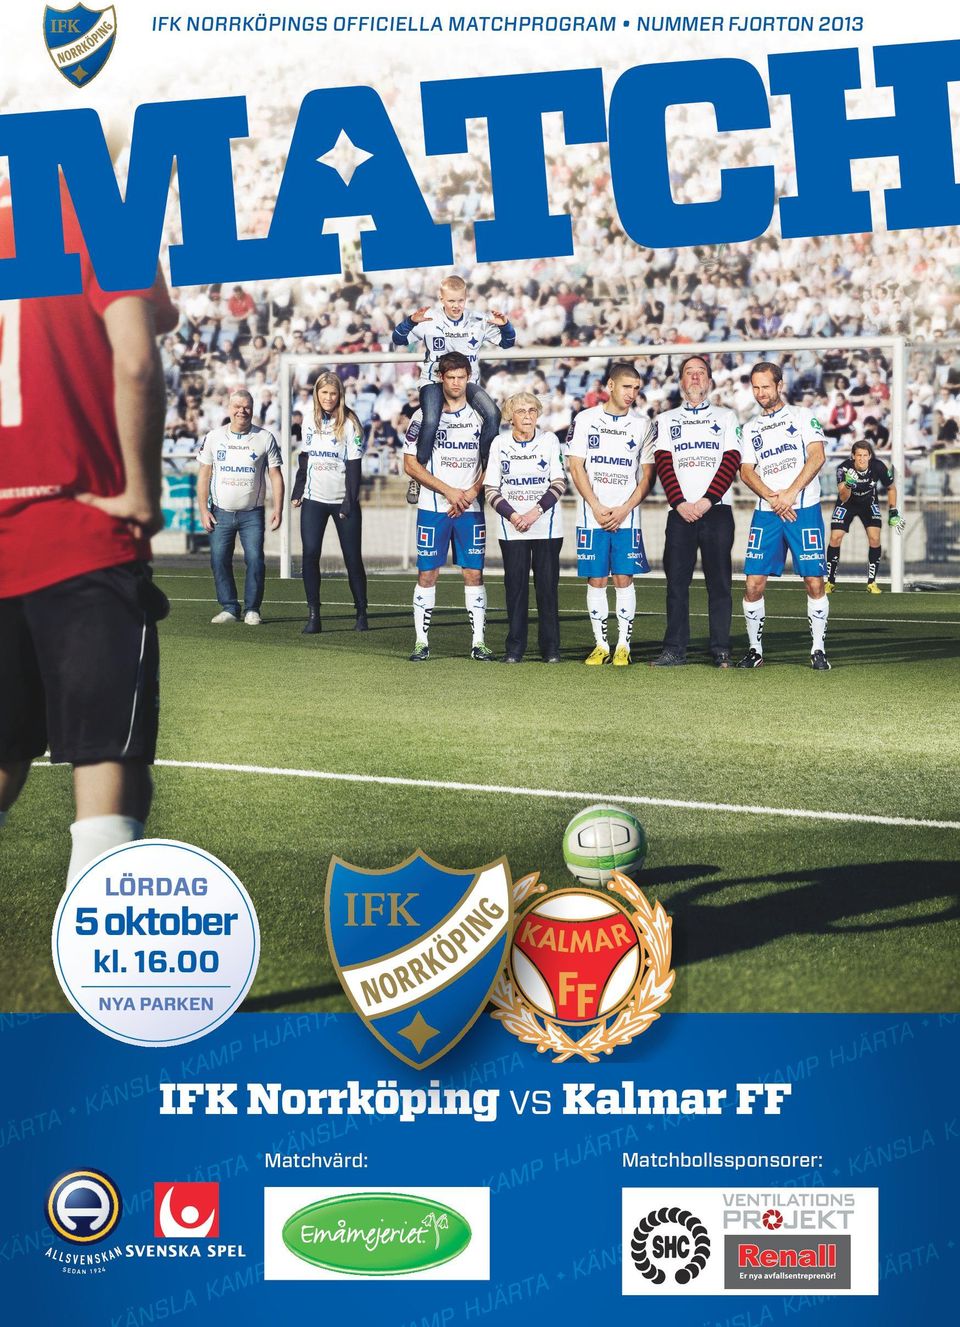 16.00 NYA PARKEN IFK Norrköping vs